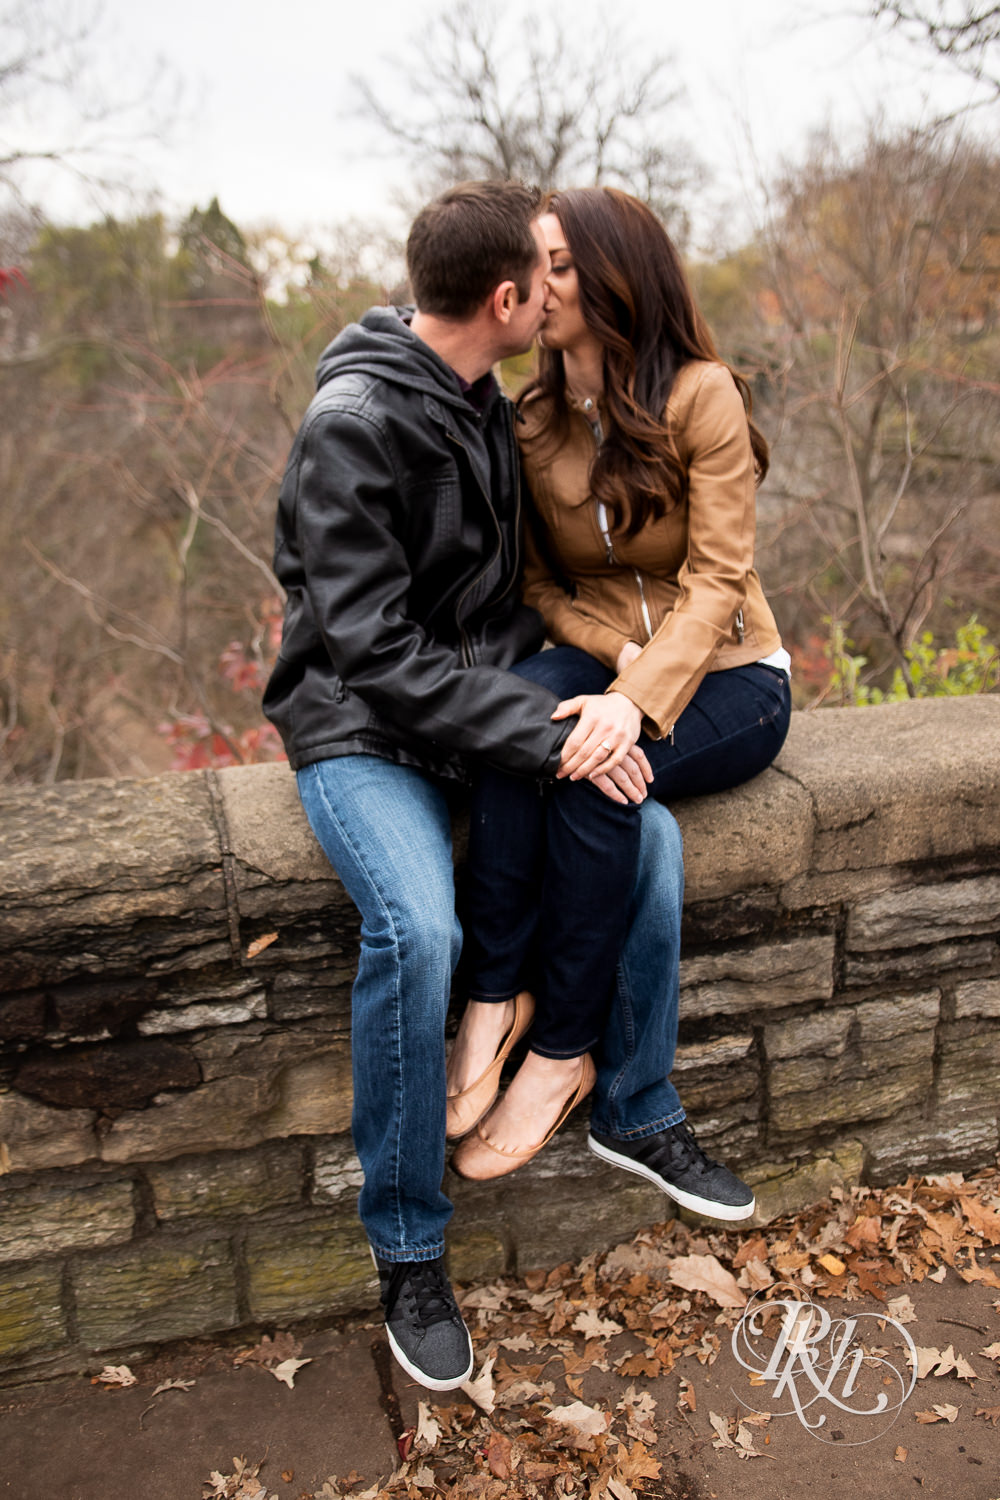 Man and woman kiss during Minnehaha Falls engagement photos in Minneapolis, Minnesota.